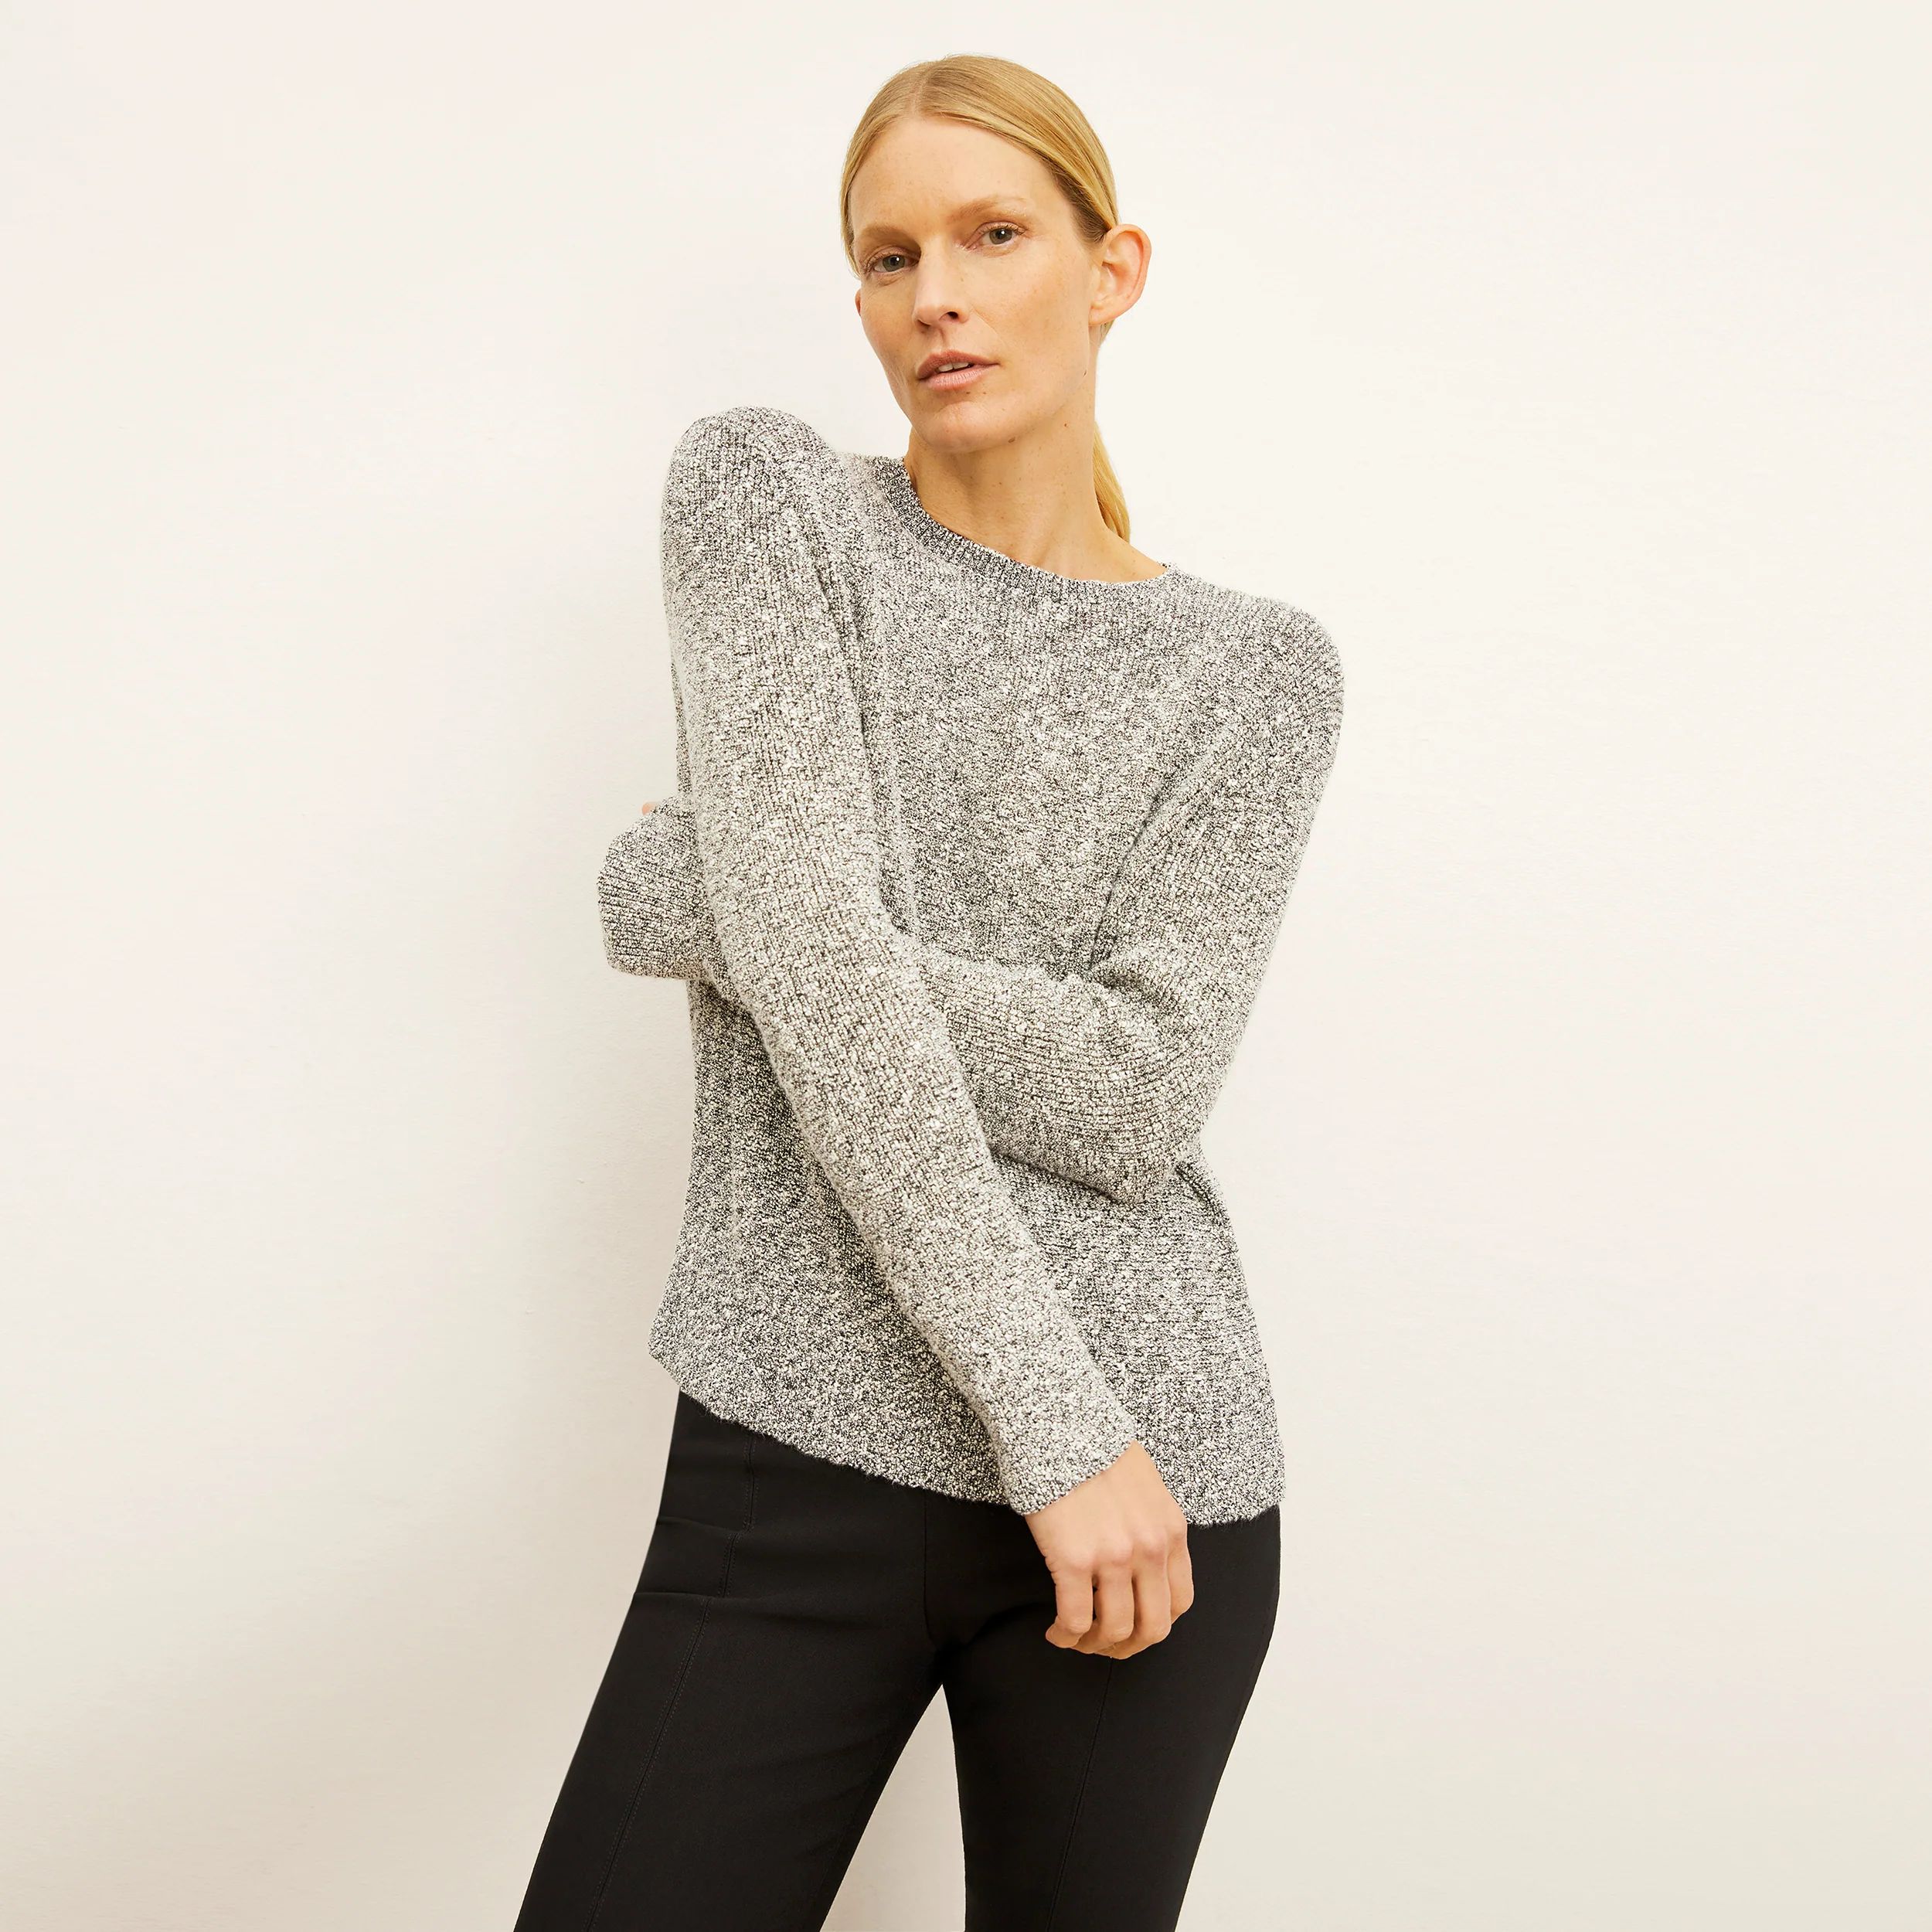 The Butler Sweater - Knit Boucle | MM LaFleur